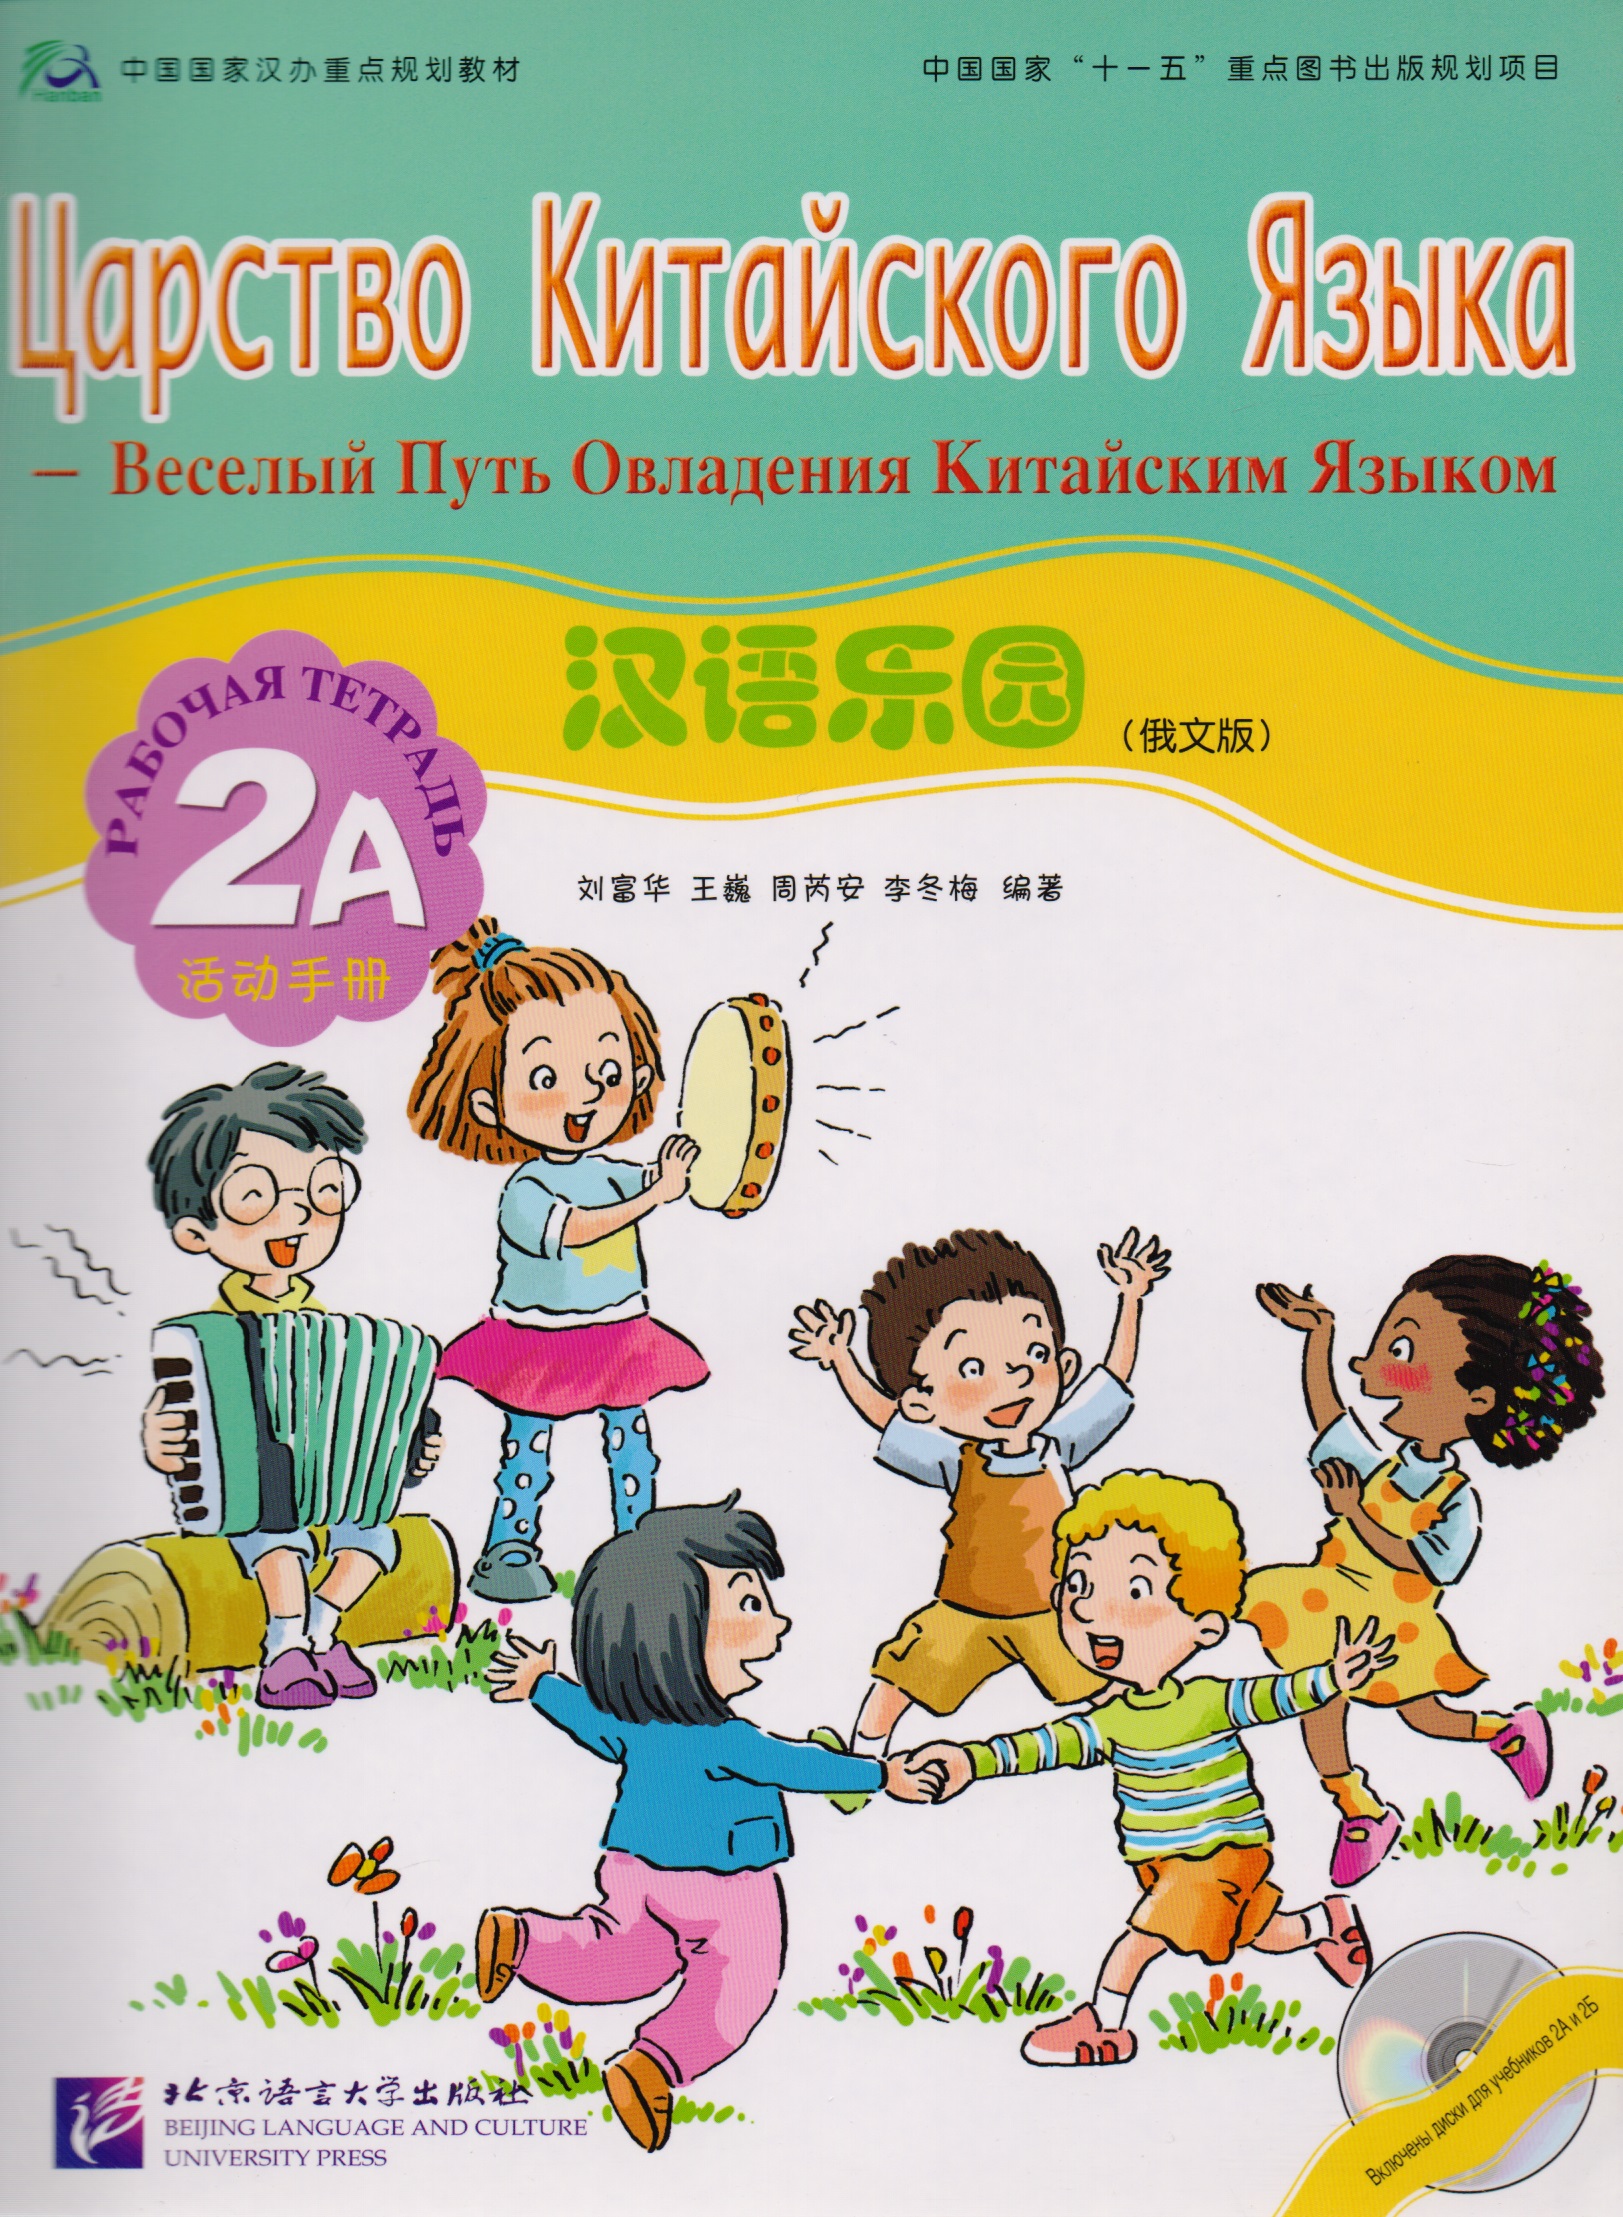 Fuhua L. Chinese Paradise (Russian Edition) 2A / Царство китайского языка (русское издание) 2A - Workbook with CD